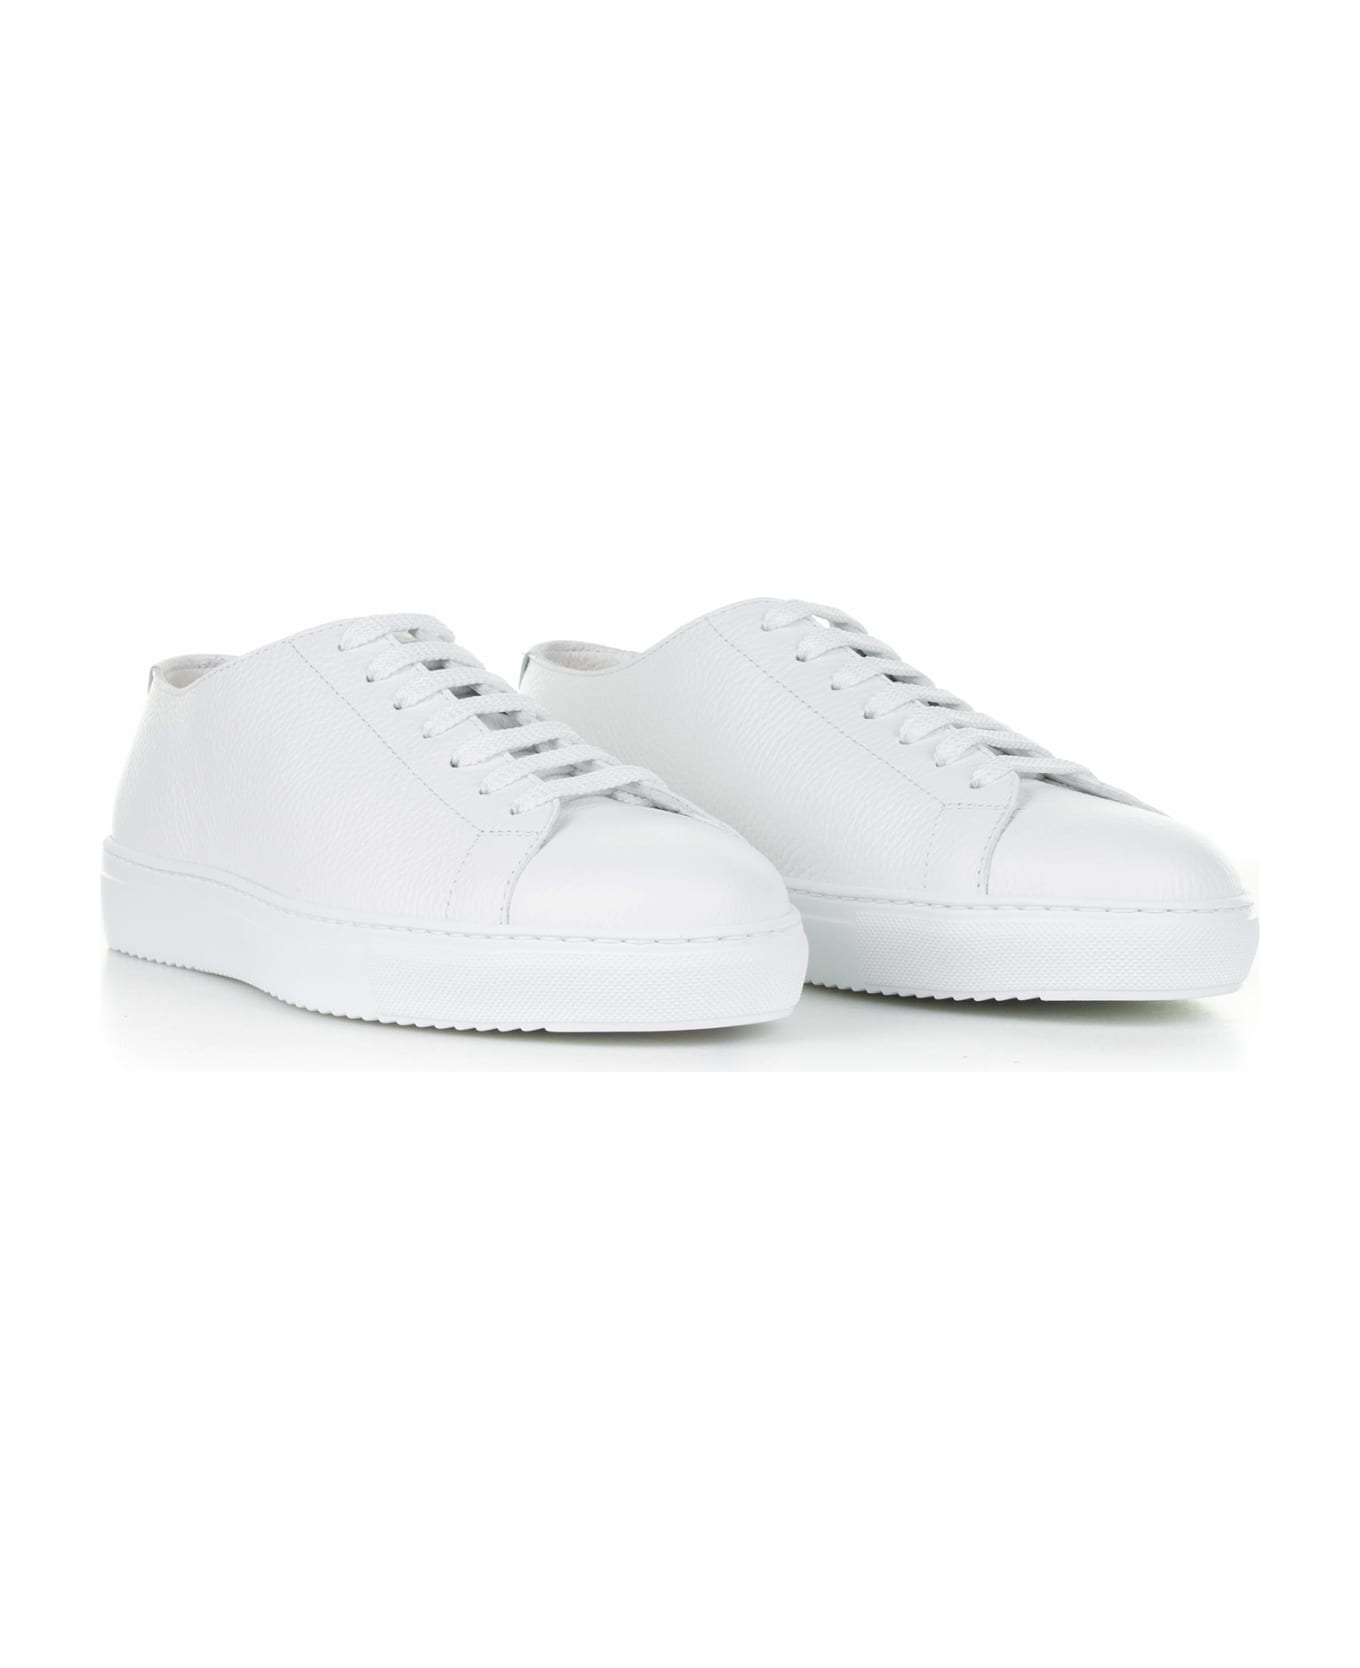 Barrett White Woven Leather Sneaker - BIANCO